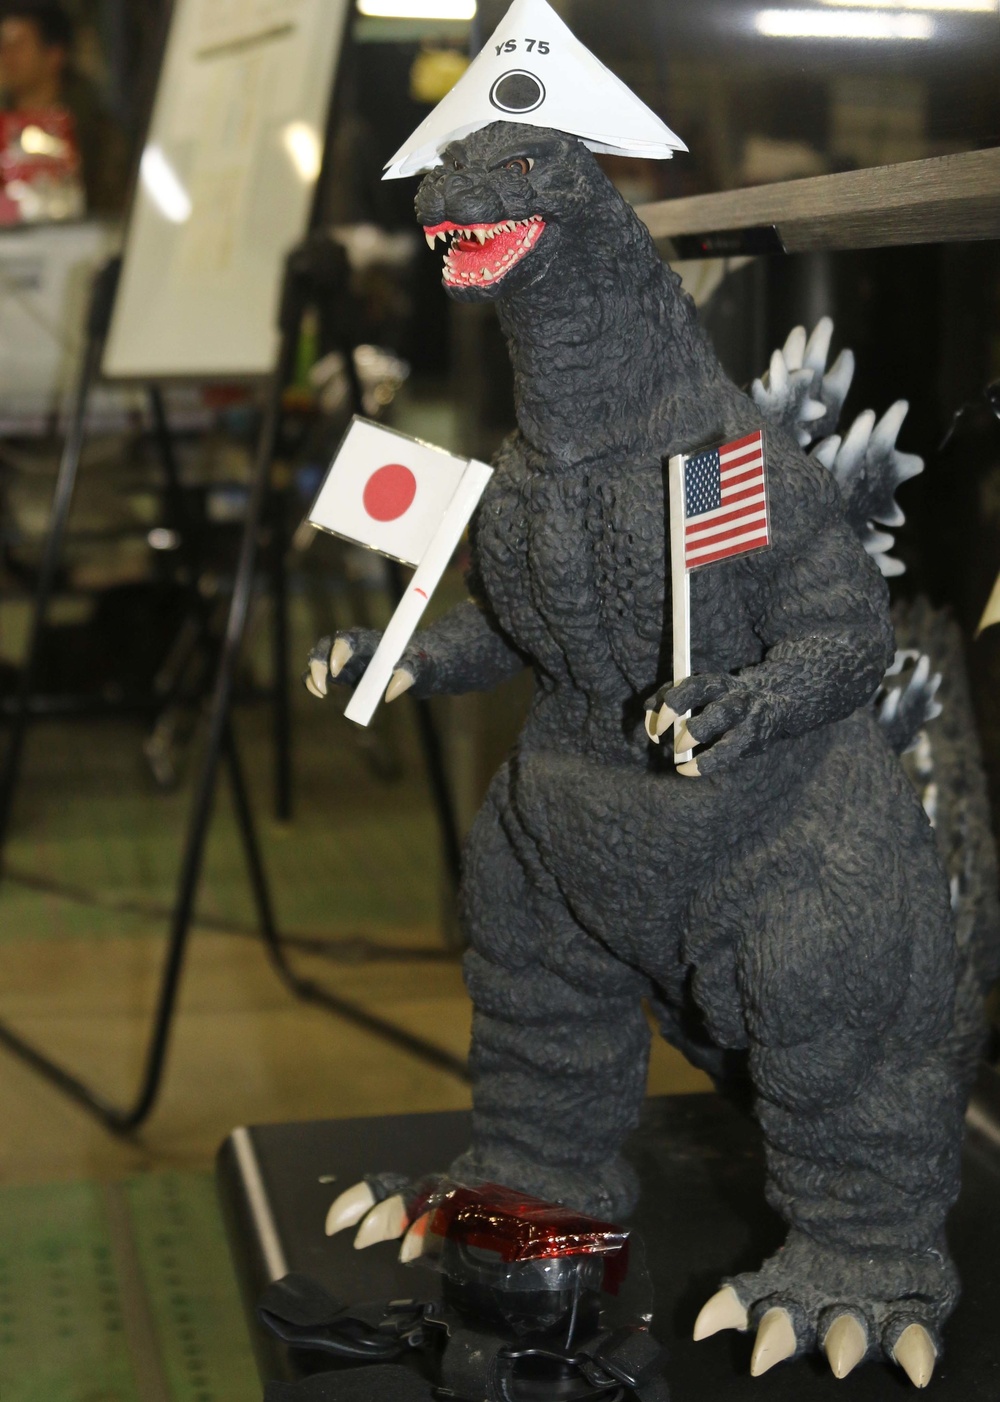 Godzilla statue plays a role in Yama Sakura 75